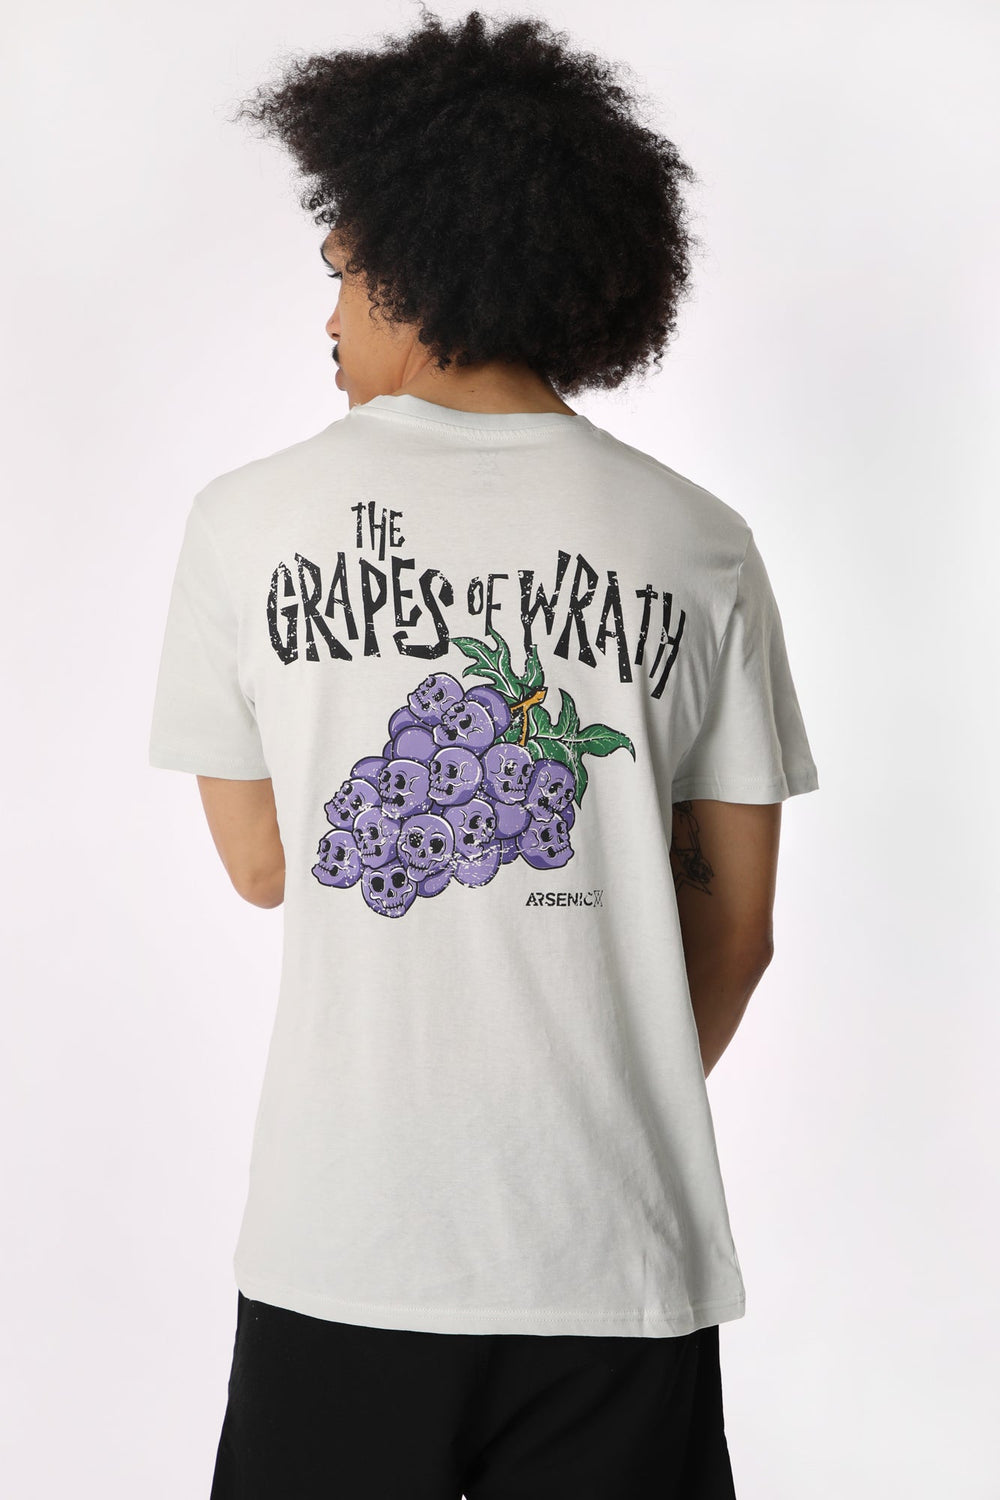 T-Shirt Imprimé Grapes of Wrath Arsenic Homme T-Shirt Imprimé Grapes of Wrath Arsenic Homme